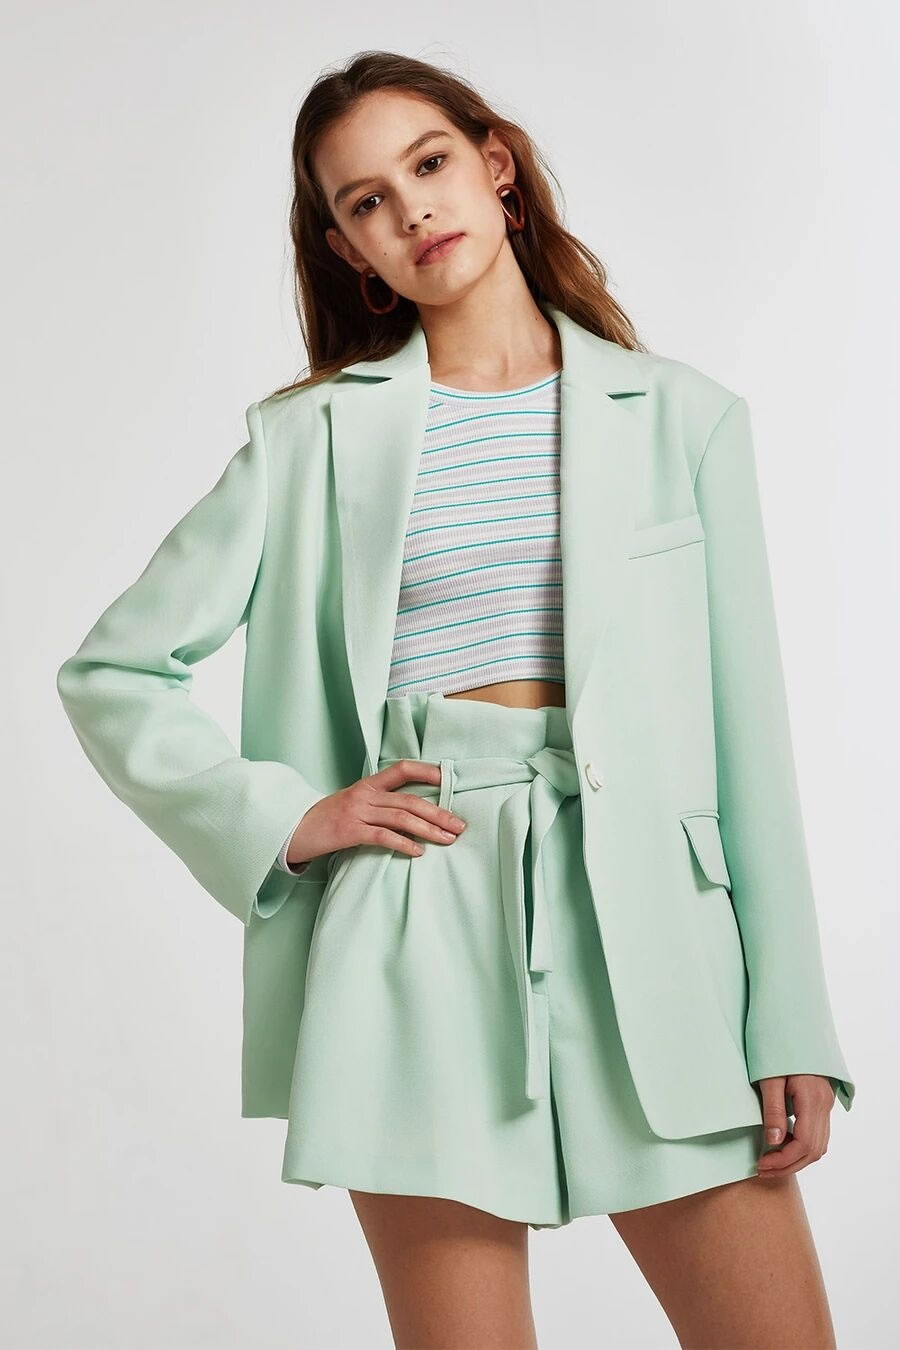 Fashion Green Solid Color Single Button Blazer,Coat-Jacket